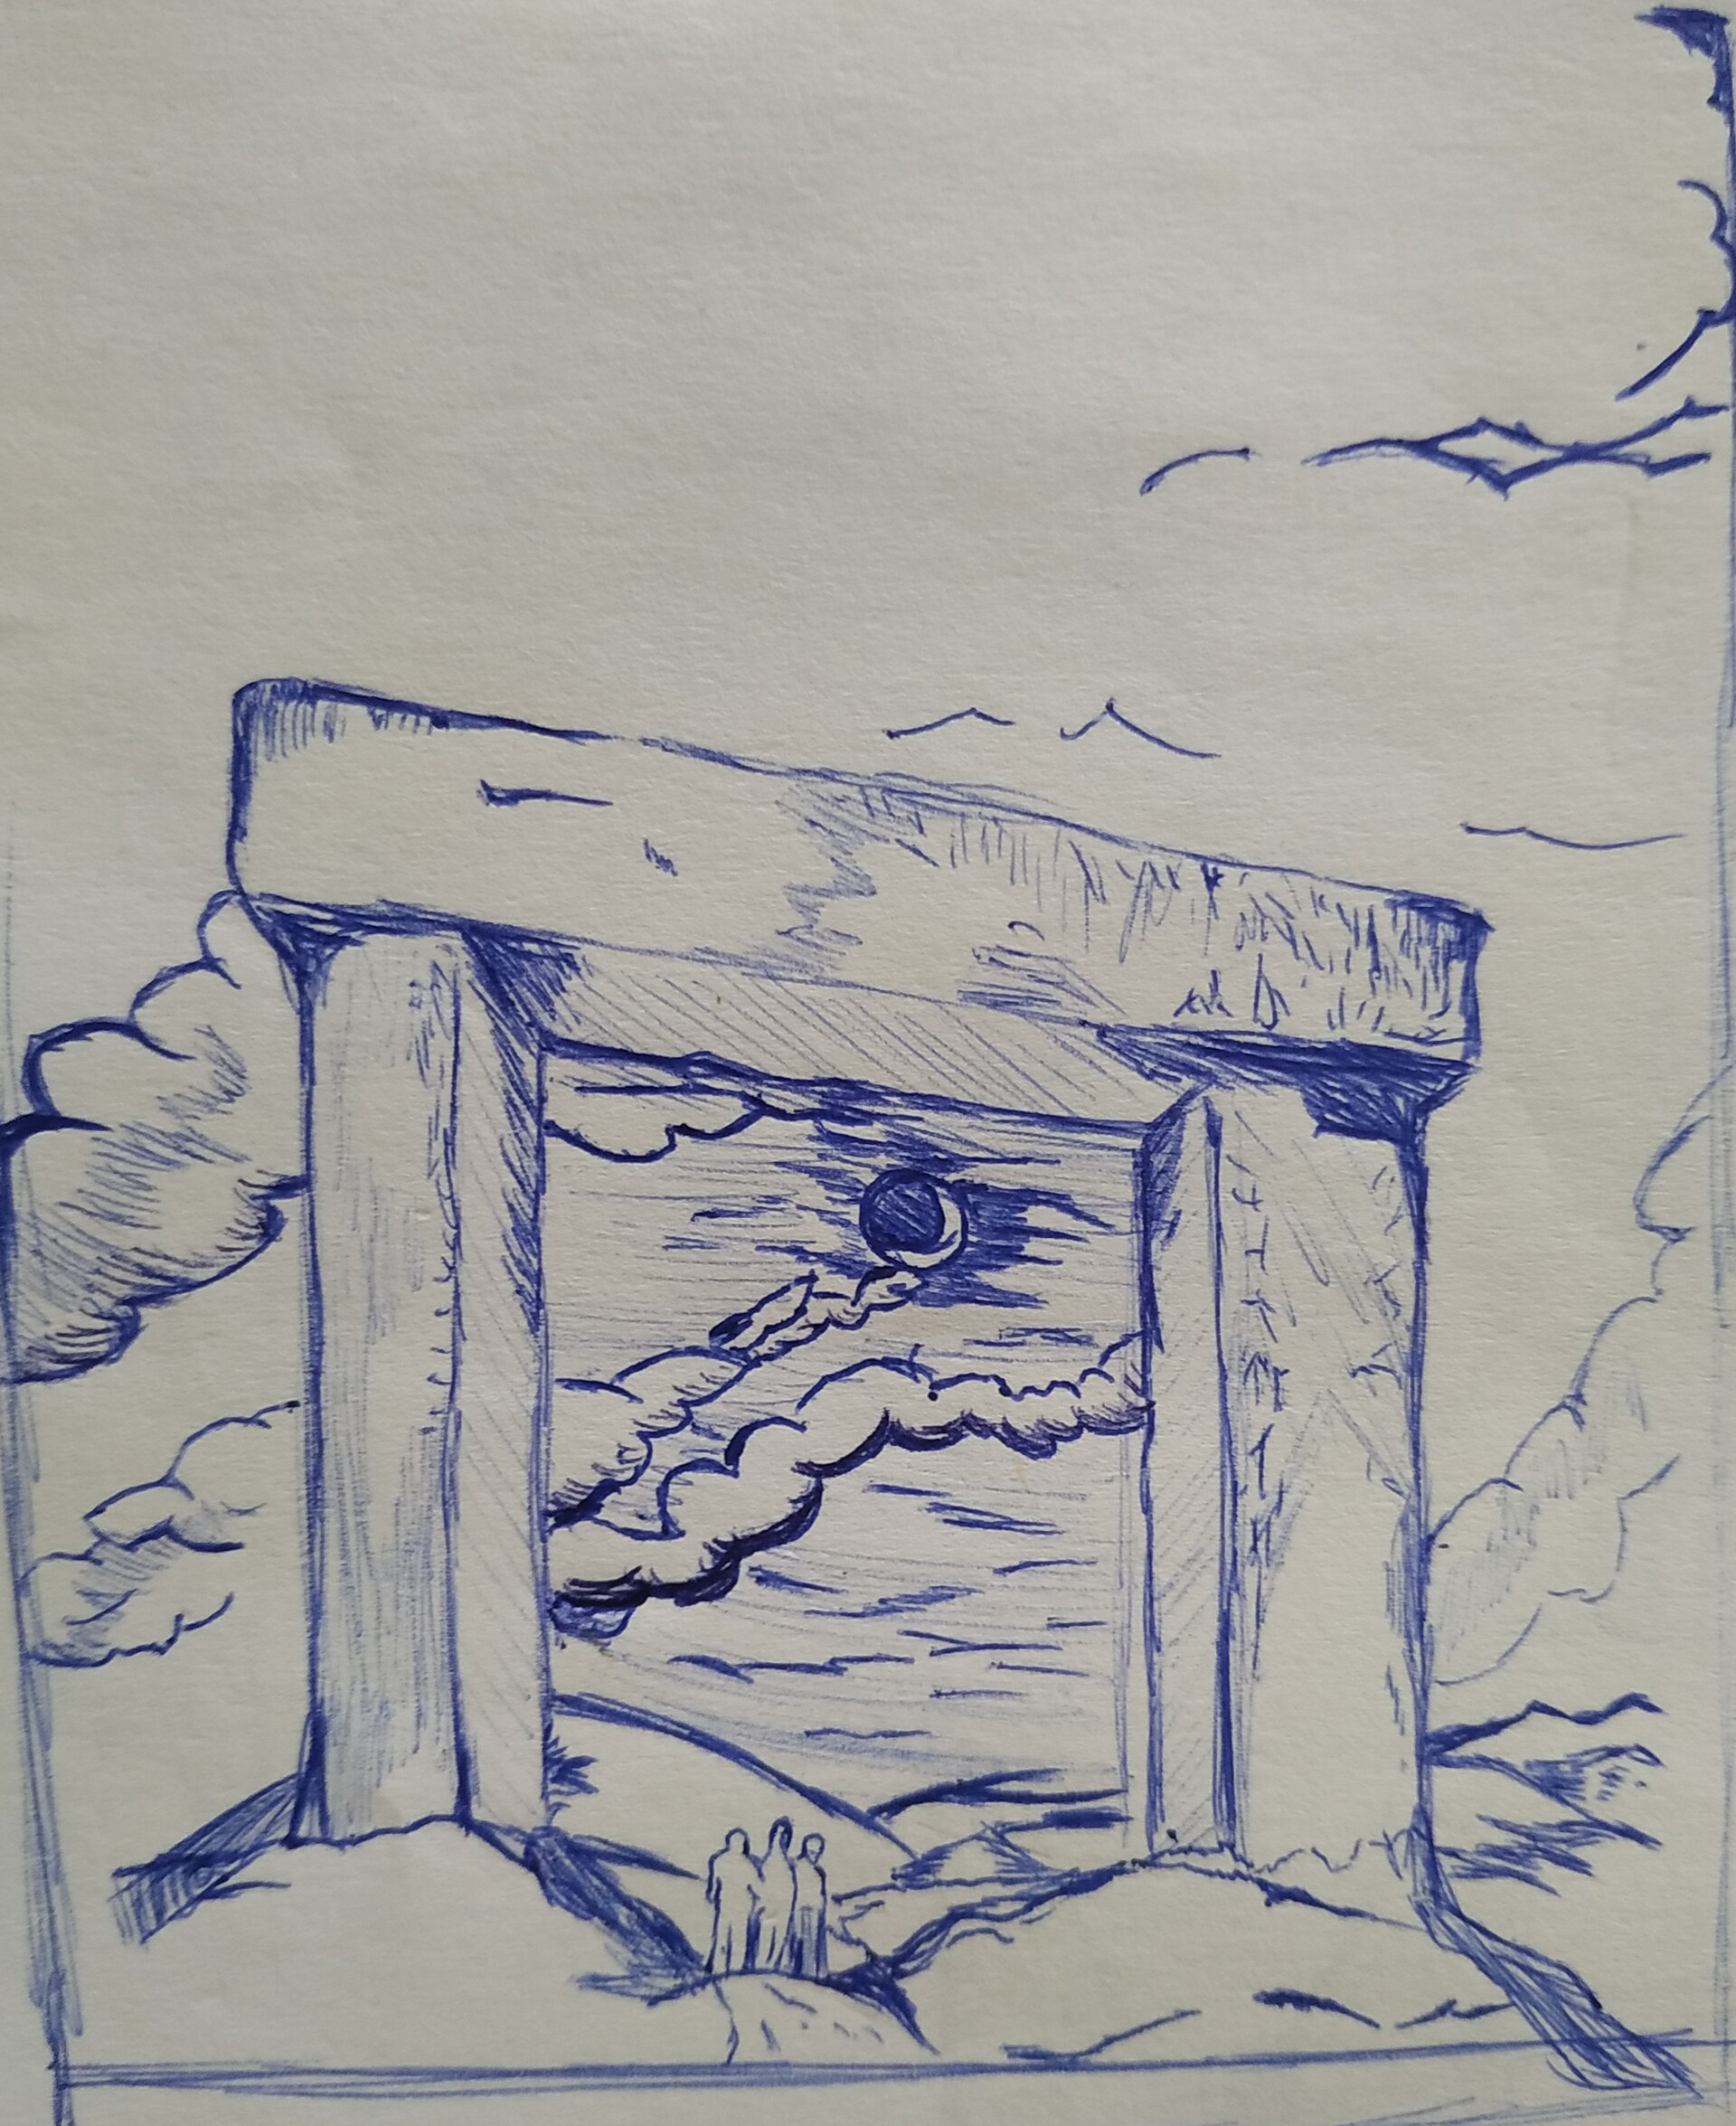 Monolith sketch by hyperartery on DeviantArt